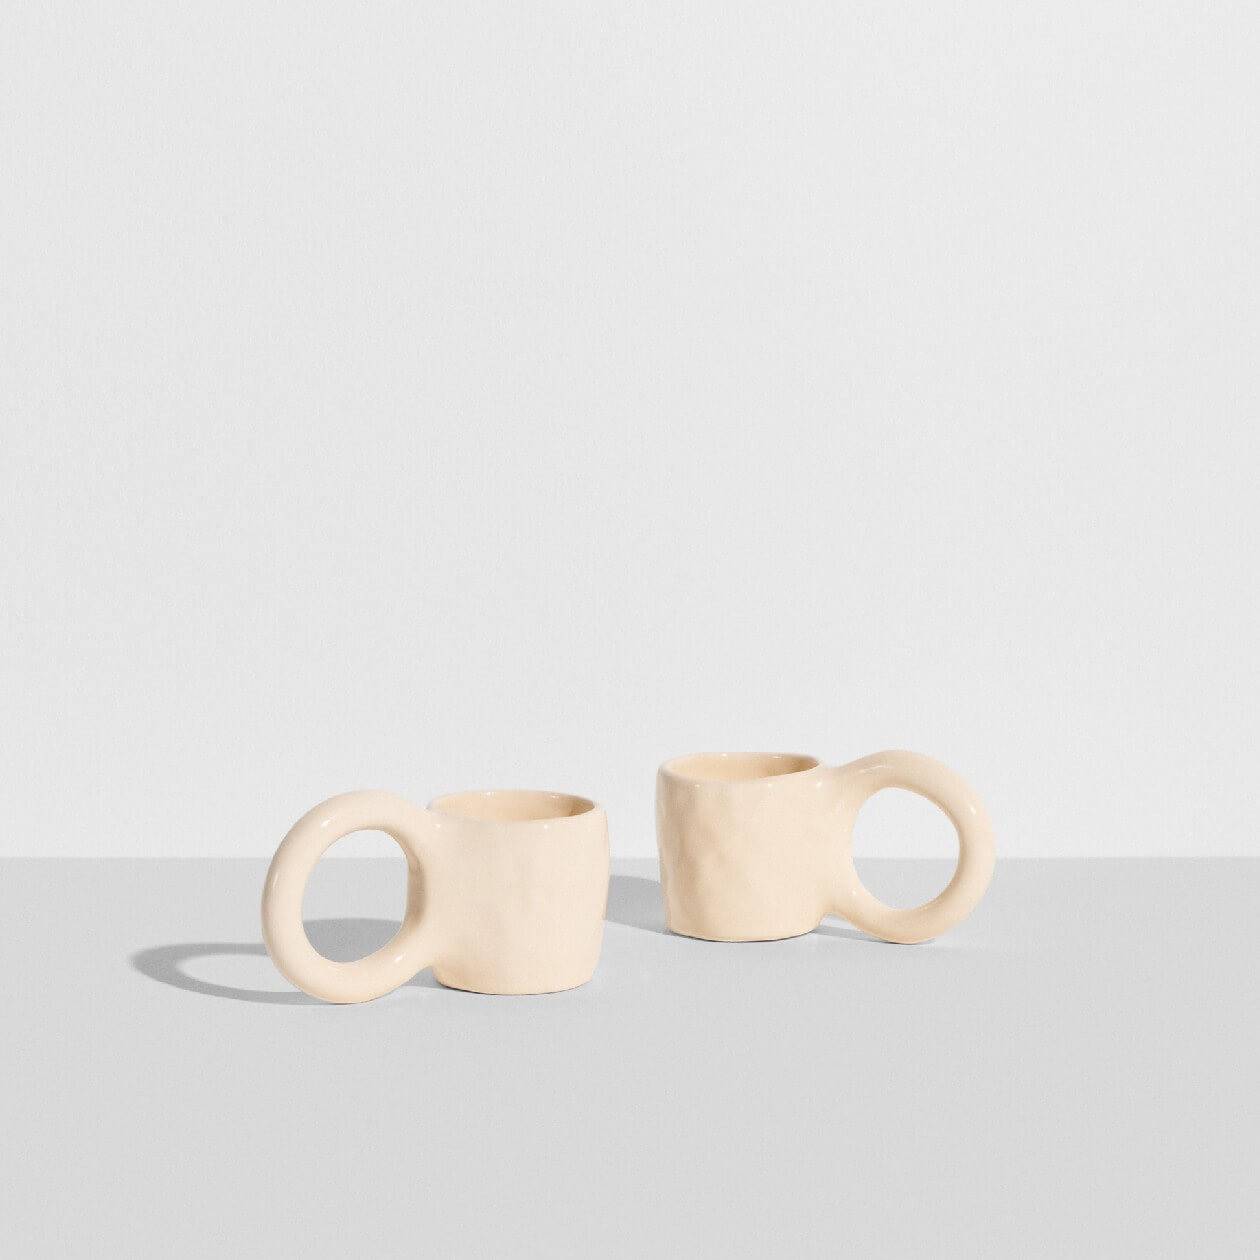 https://us.petitefriture.com/20053-large_default/donut-espresso-cups.jpg